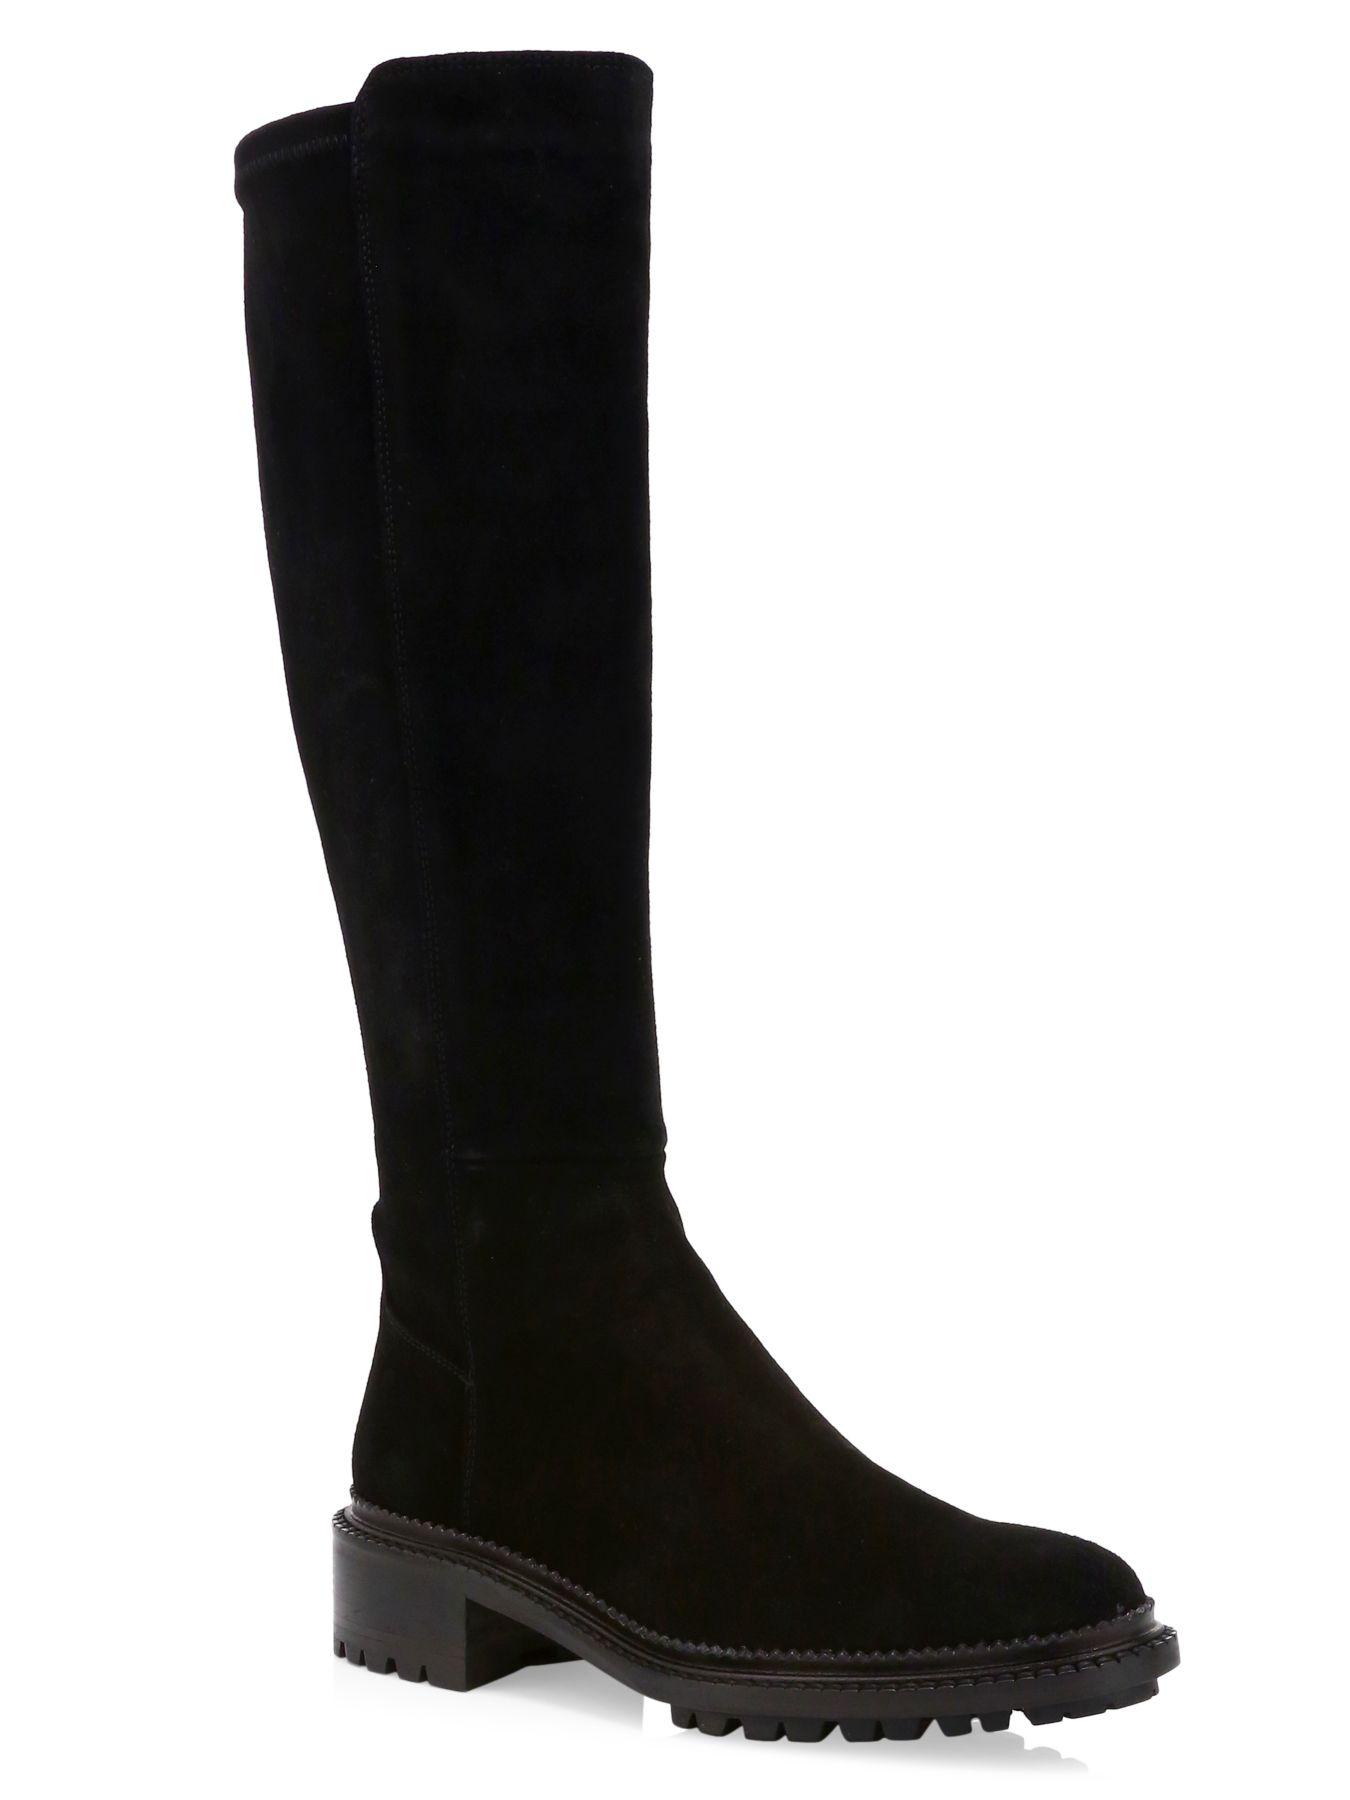 Aquatalia Oliviana Knee-high Suede Boots in Black - Lyst